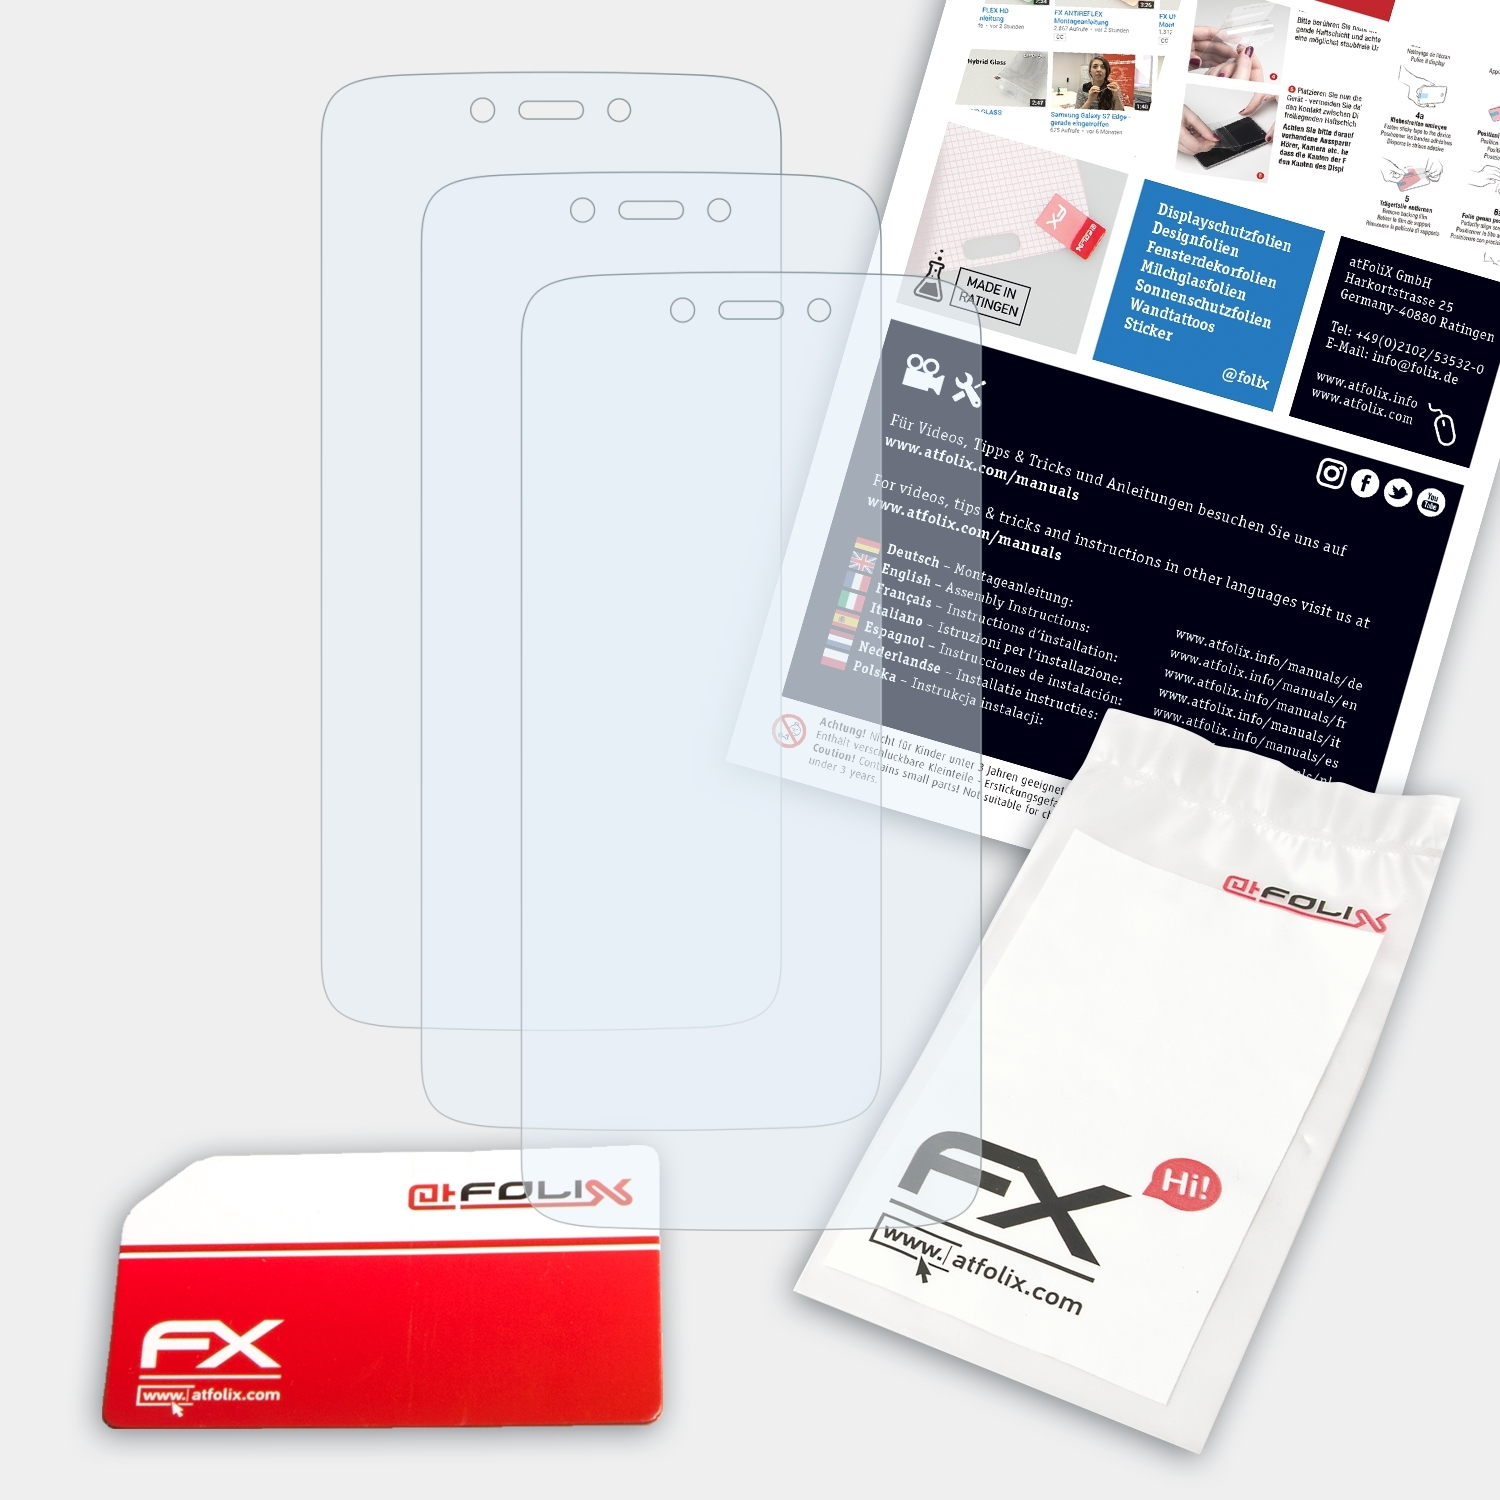 ATFOLIX 3x FX-Clear Displayschutz(für Lenovo Moto C Plus) Motorola